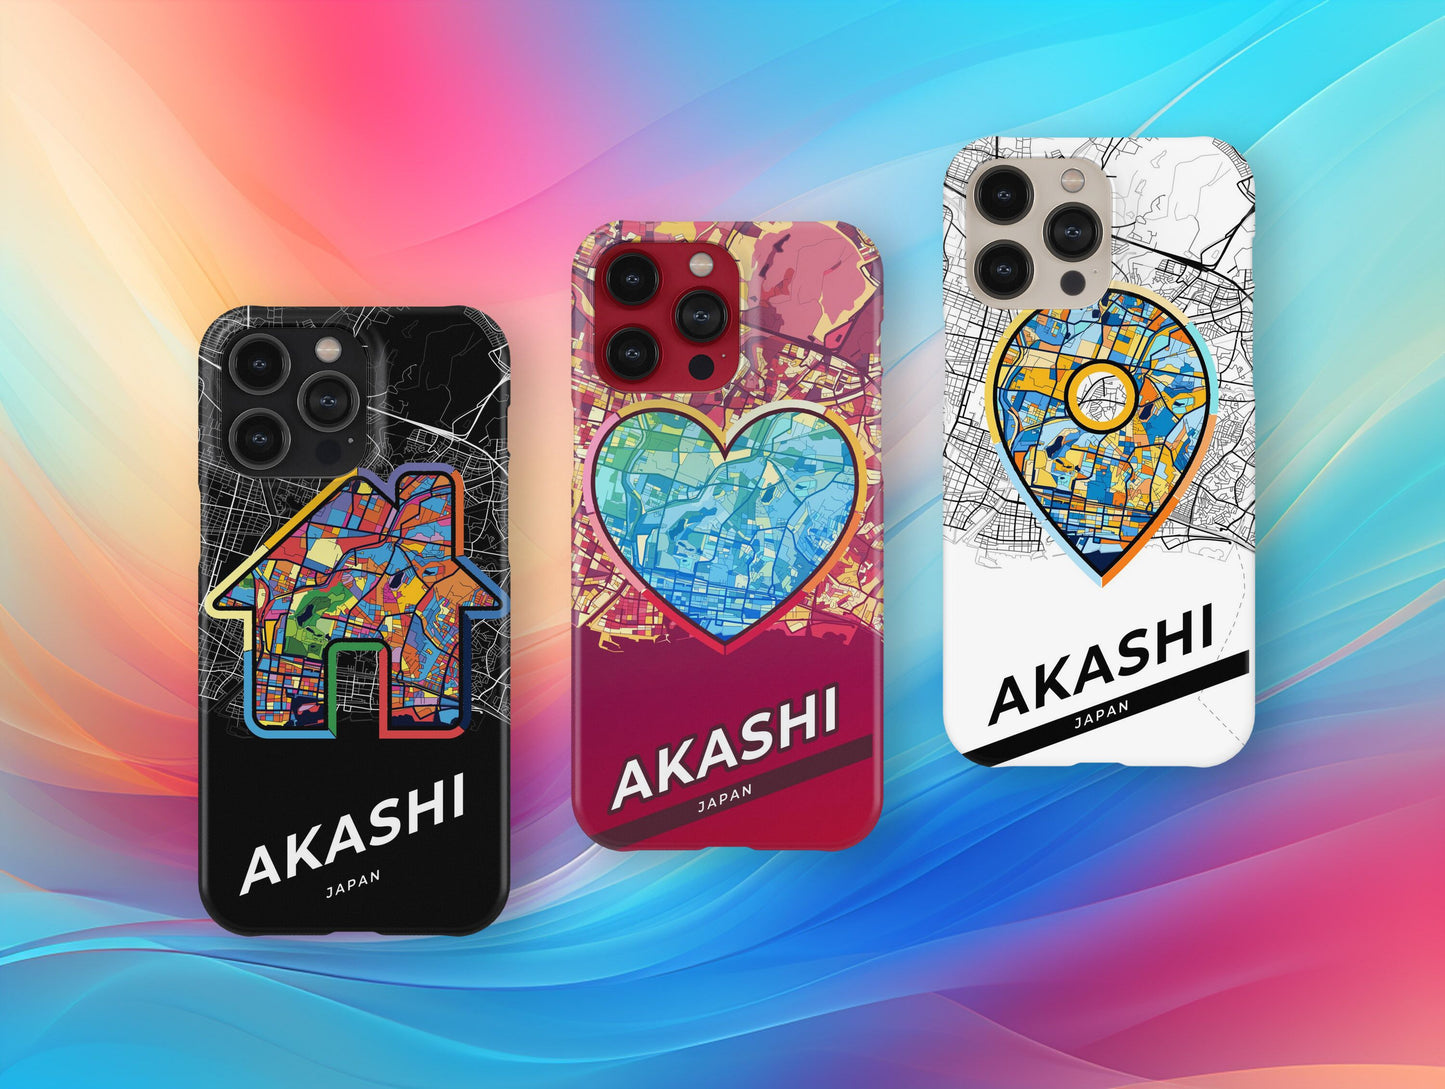 Akashi Japan slim phone case with colorful icon. Birthday, wedding or housewarming gift. Couple match cases.